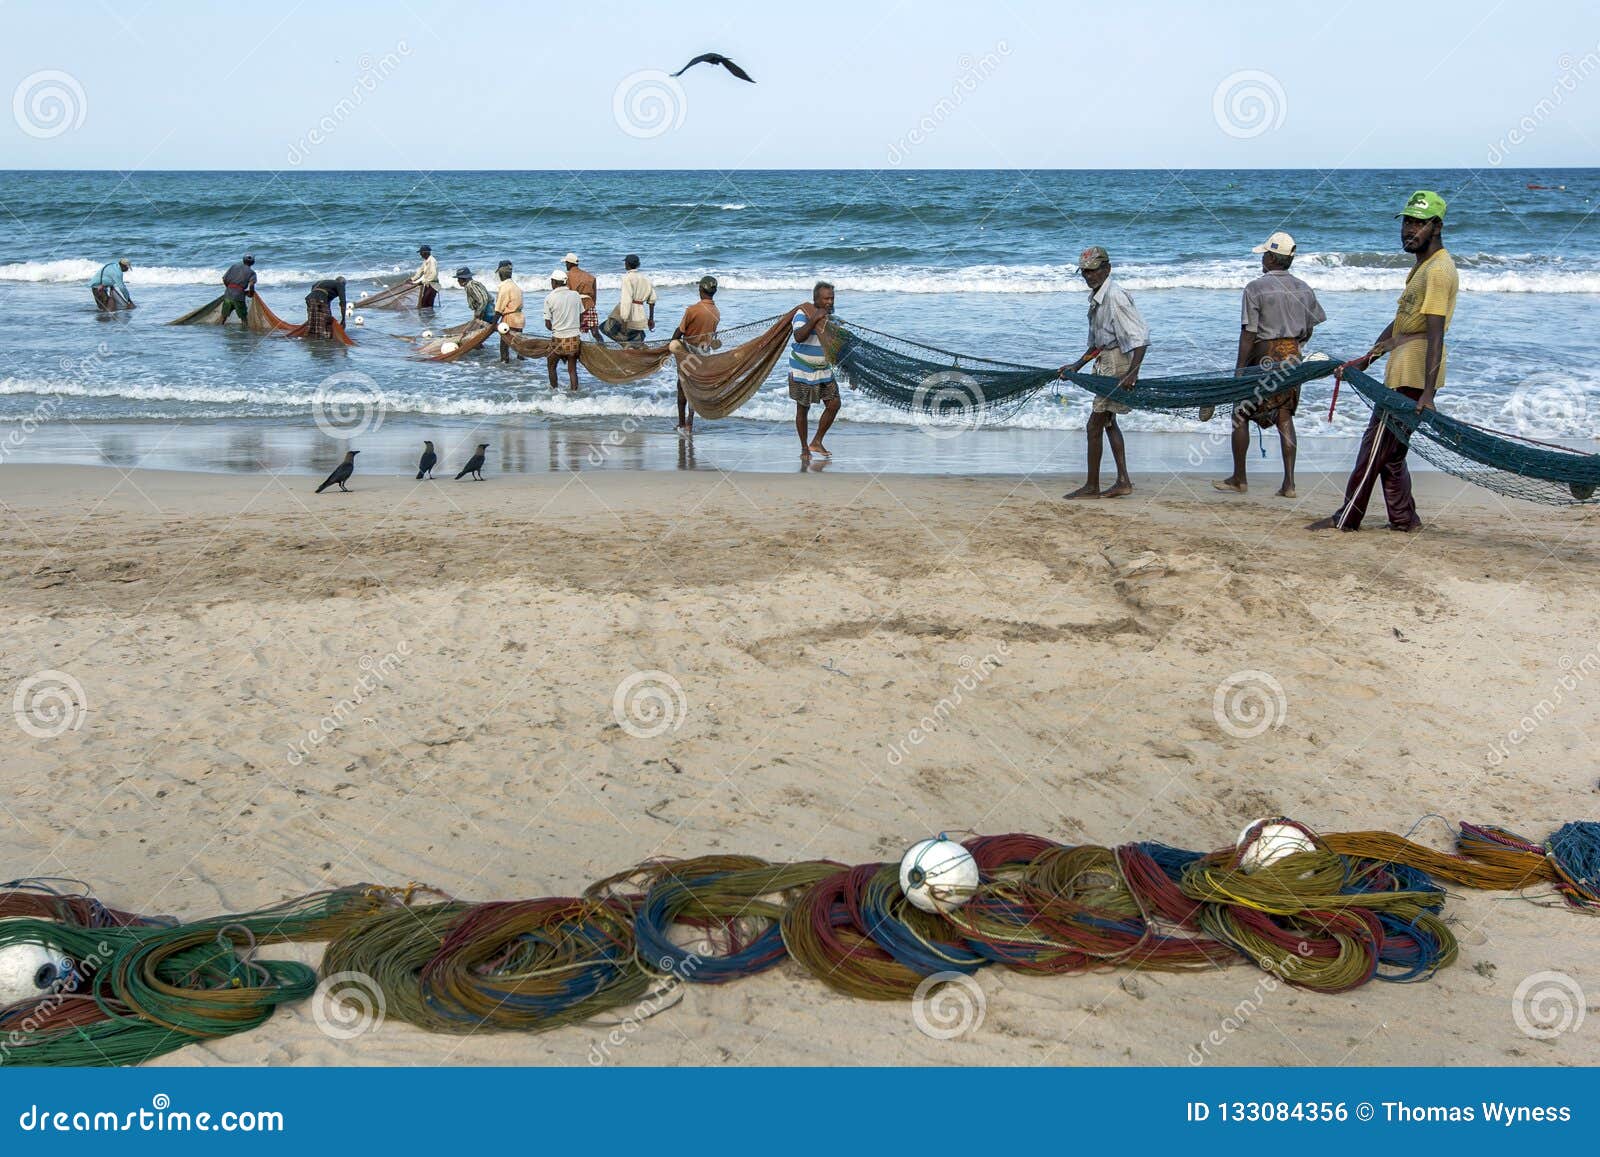 https://thumbs.dreamstime.com/z/fishermen-drag-large-fishing-net-onto-beach-uppuveli-east-coast-sri-lanka-late-afternoon-133084356.jpg